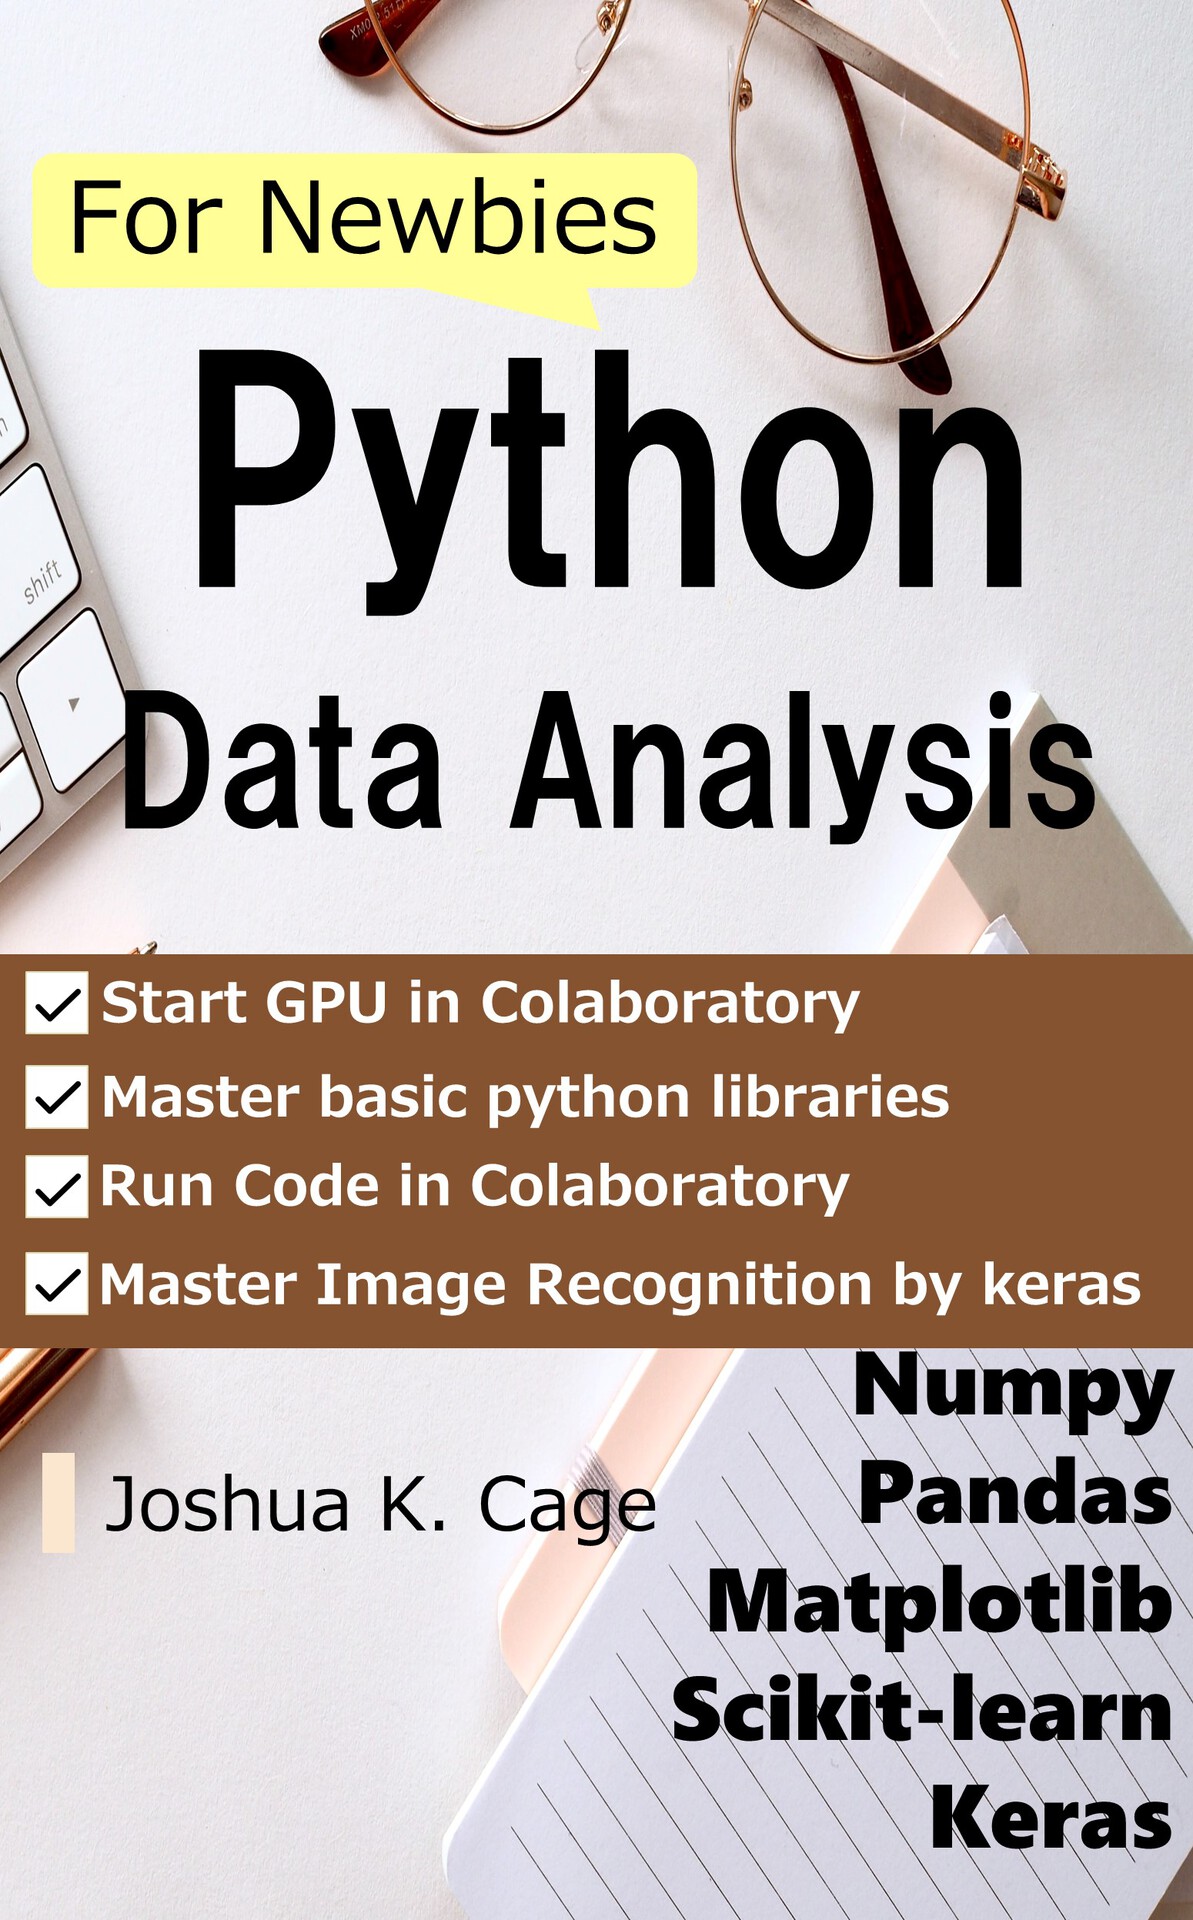 Python Data Analysis for Newbies Numpy, Pandas, Matplotlib, Scikit-learn, Keras